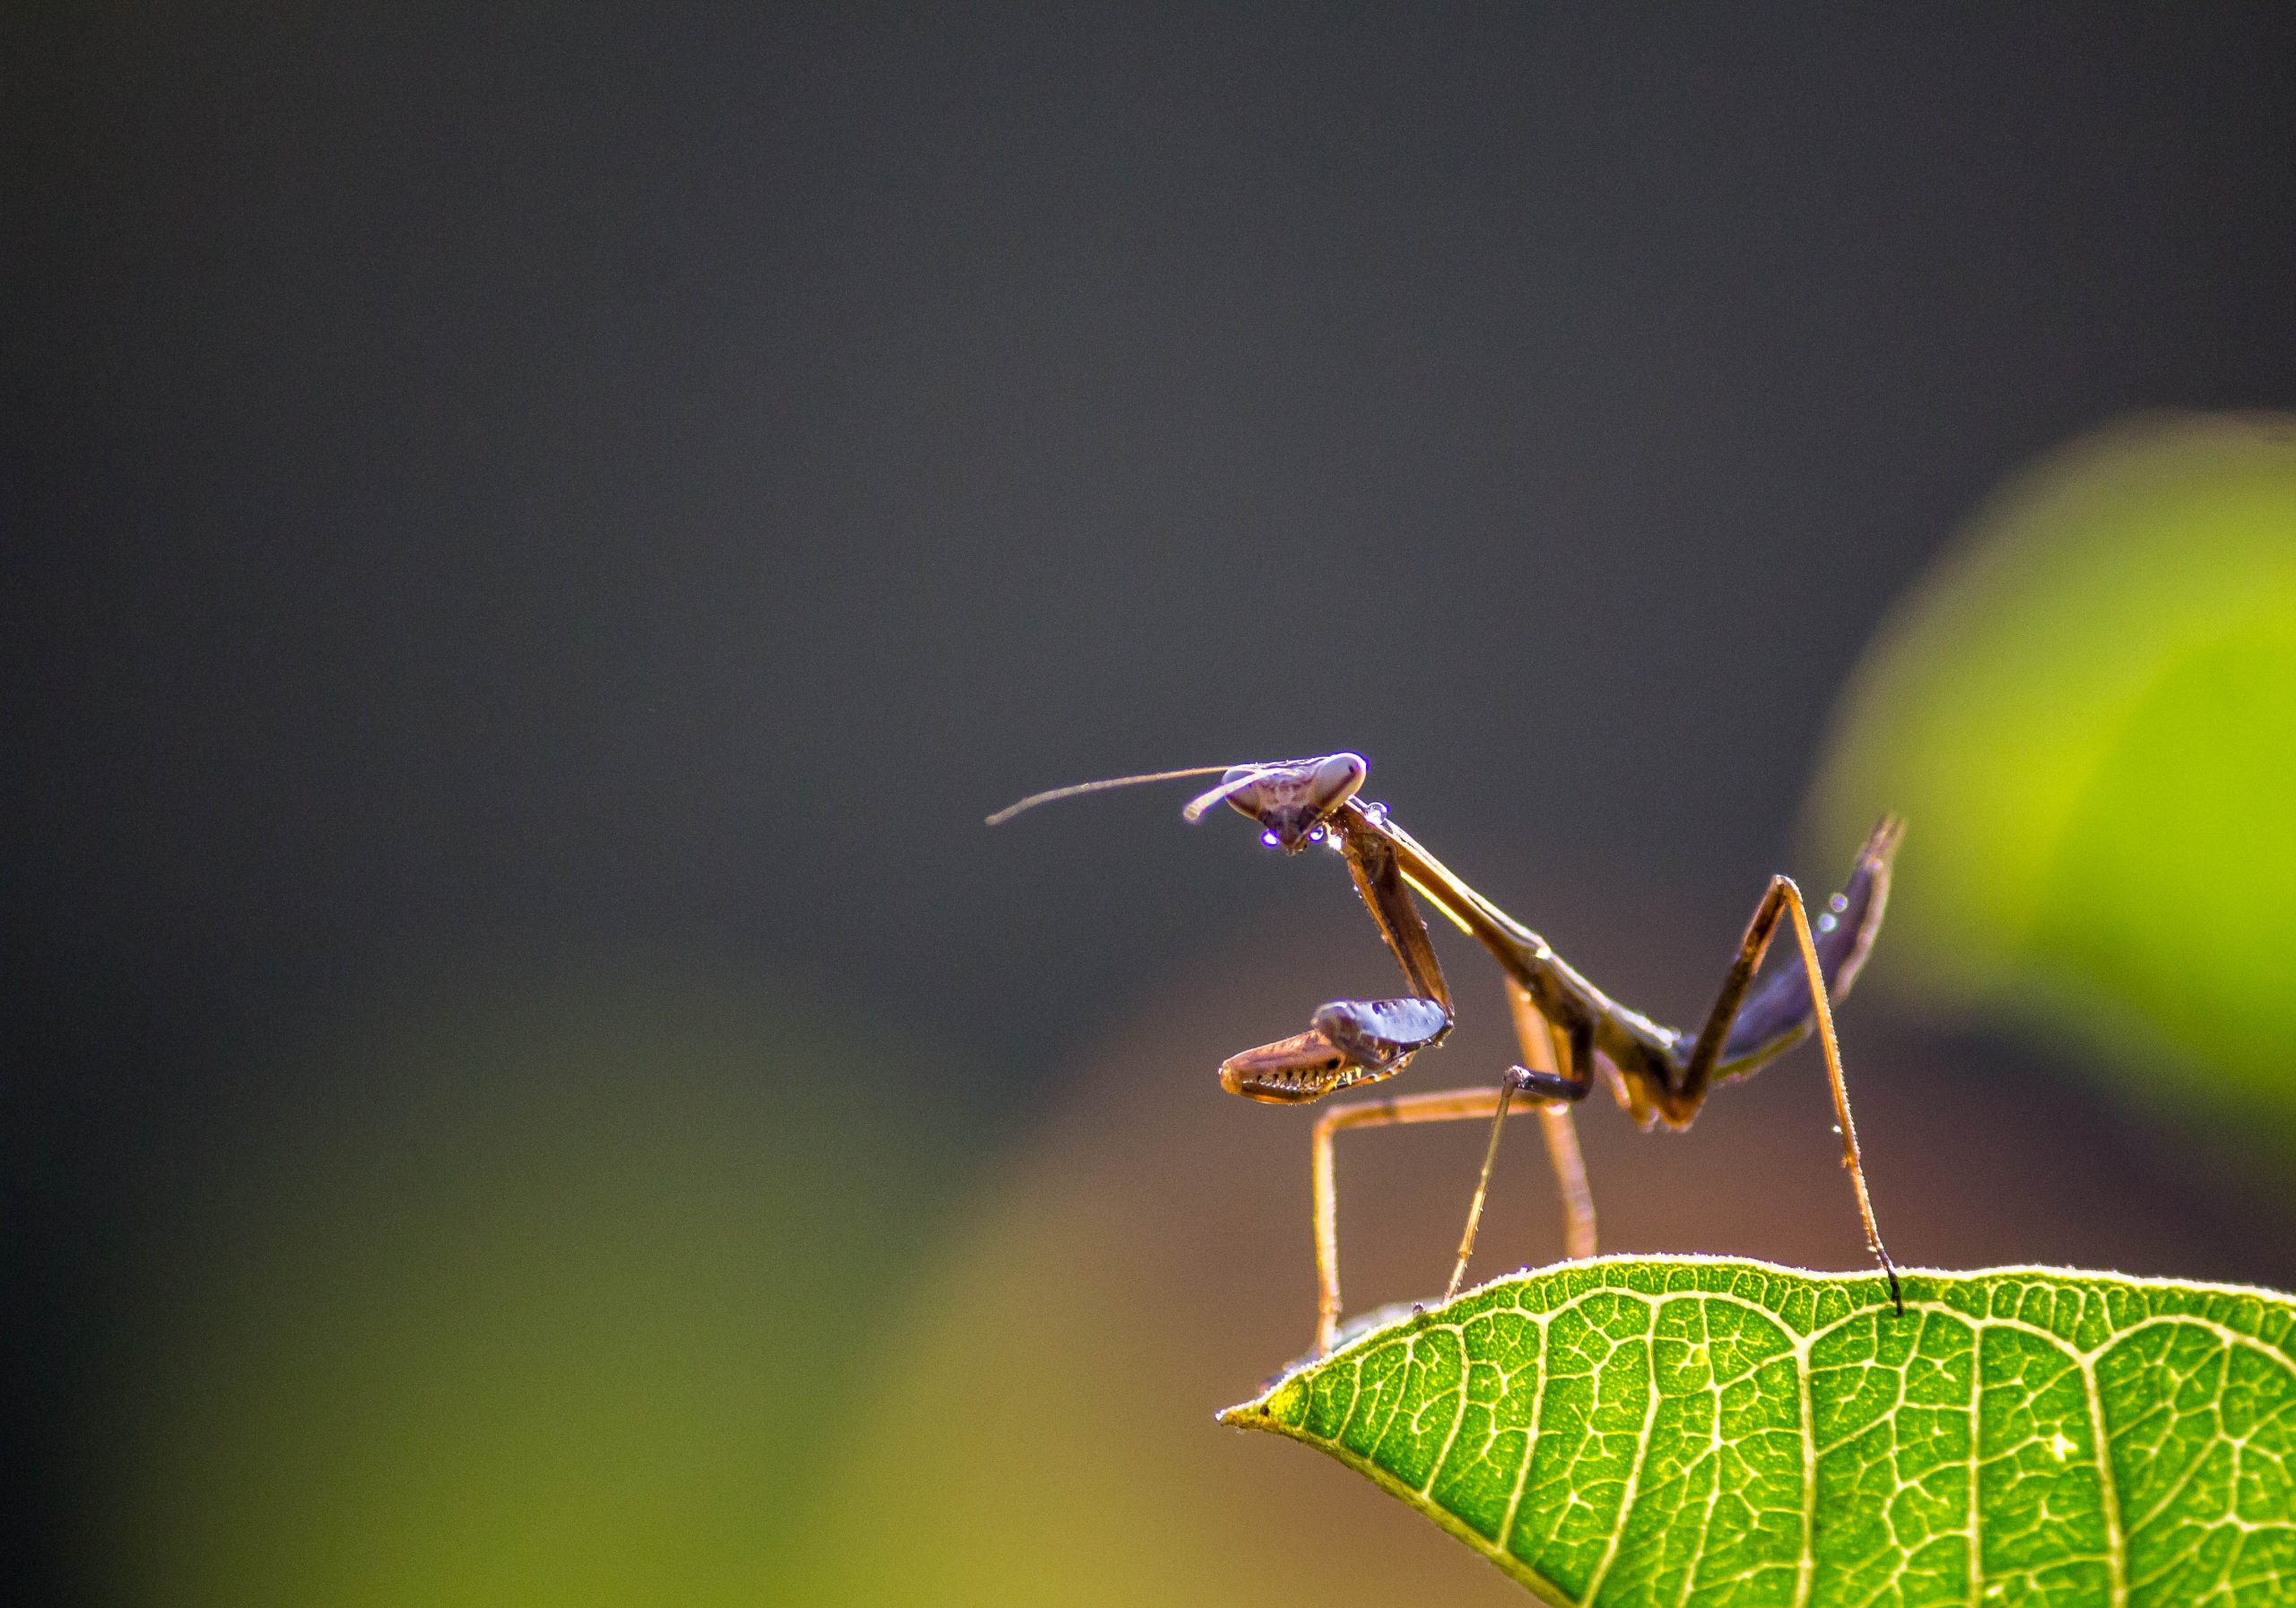 A mantis on a leaf